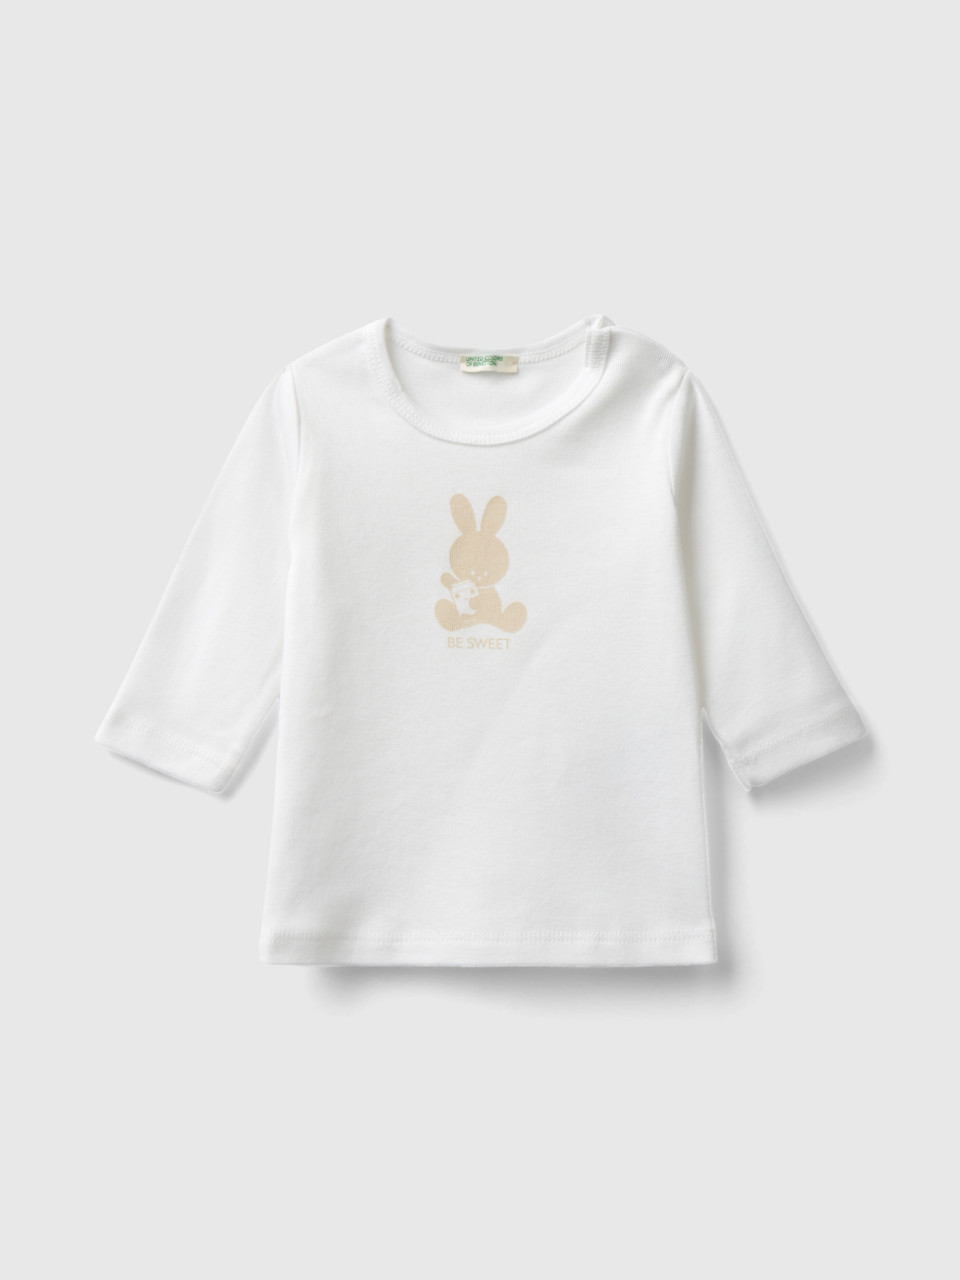 Benetton, Long Sleeve 100% Organic Cotton T-shirt, Creamy White, Kids